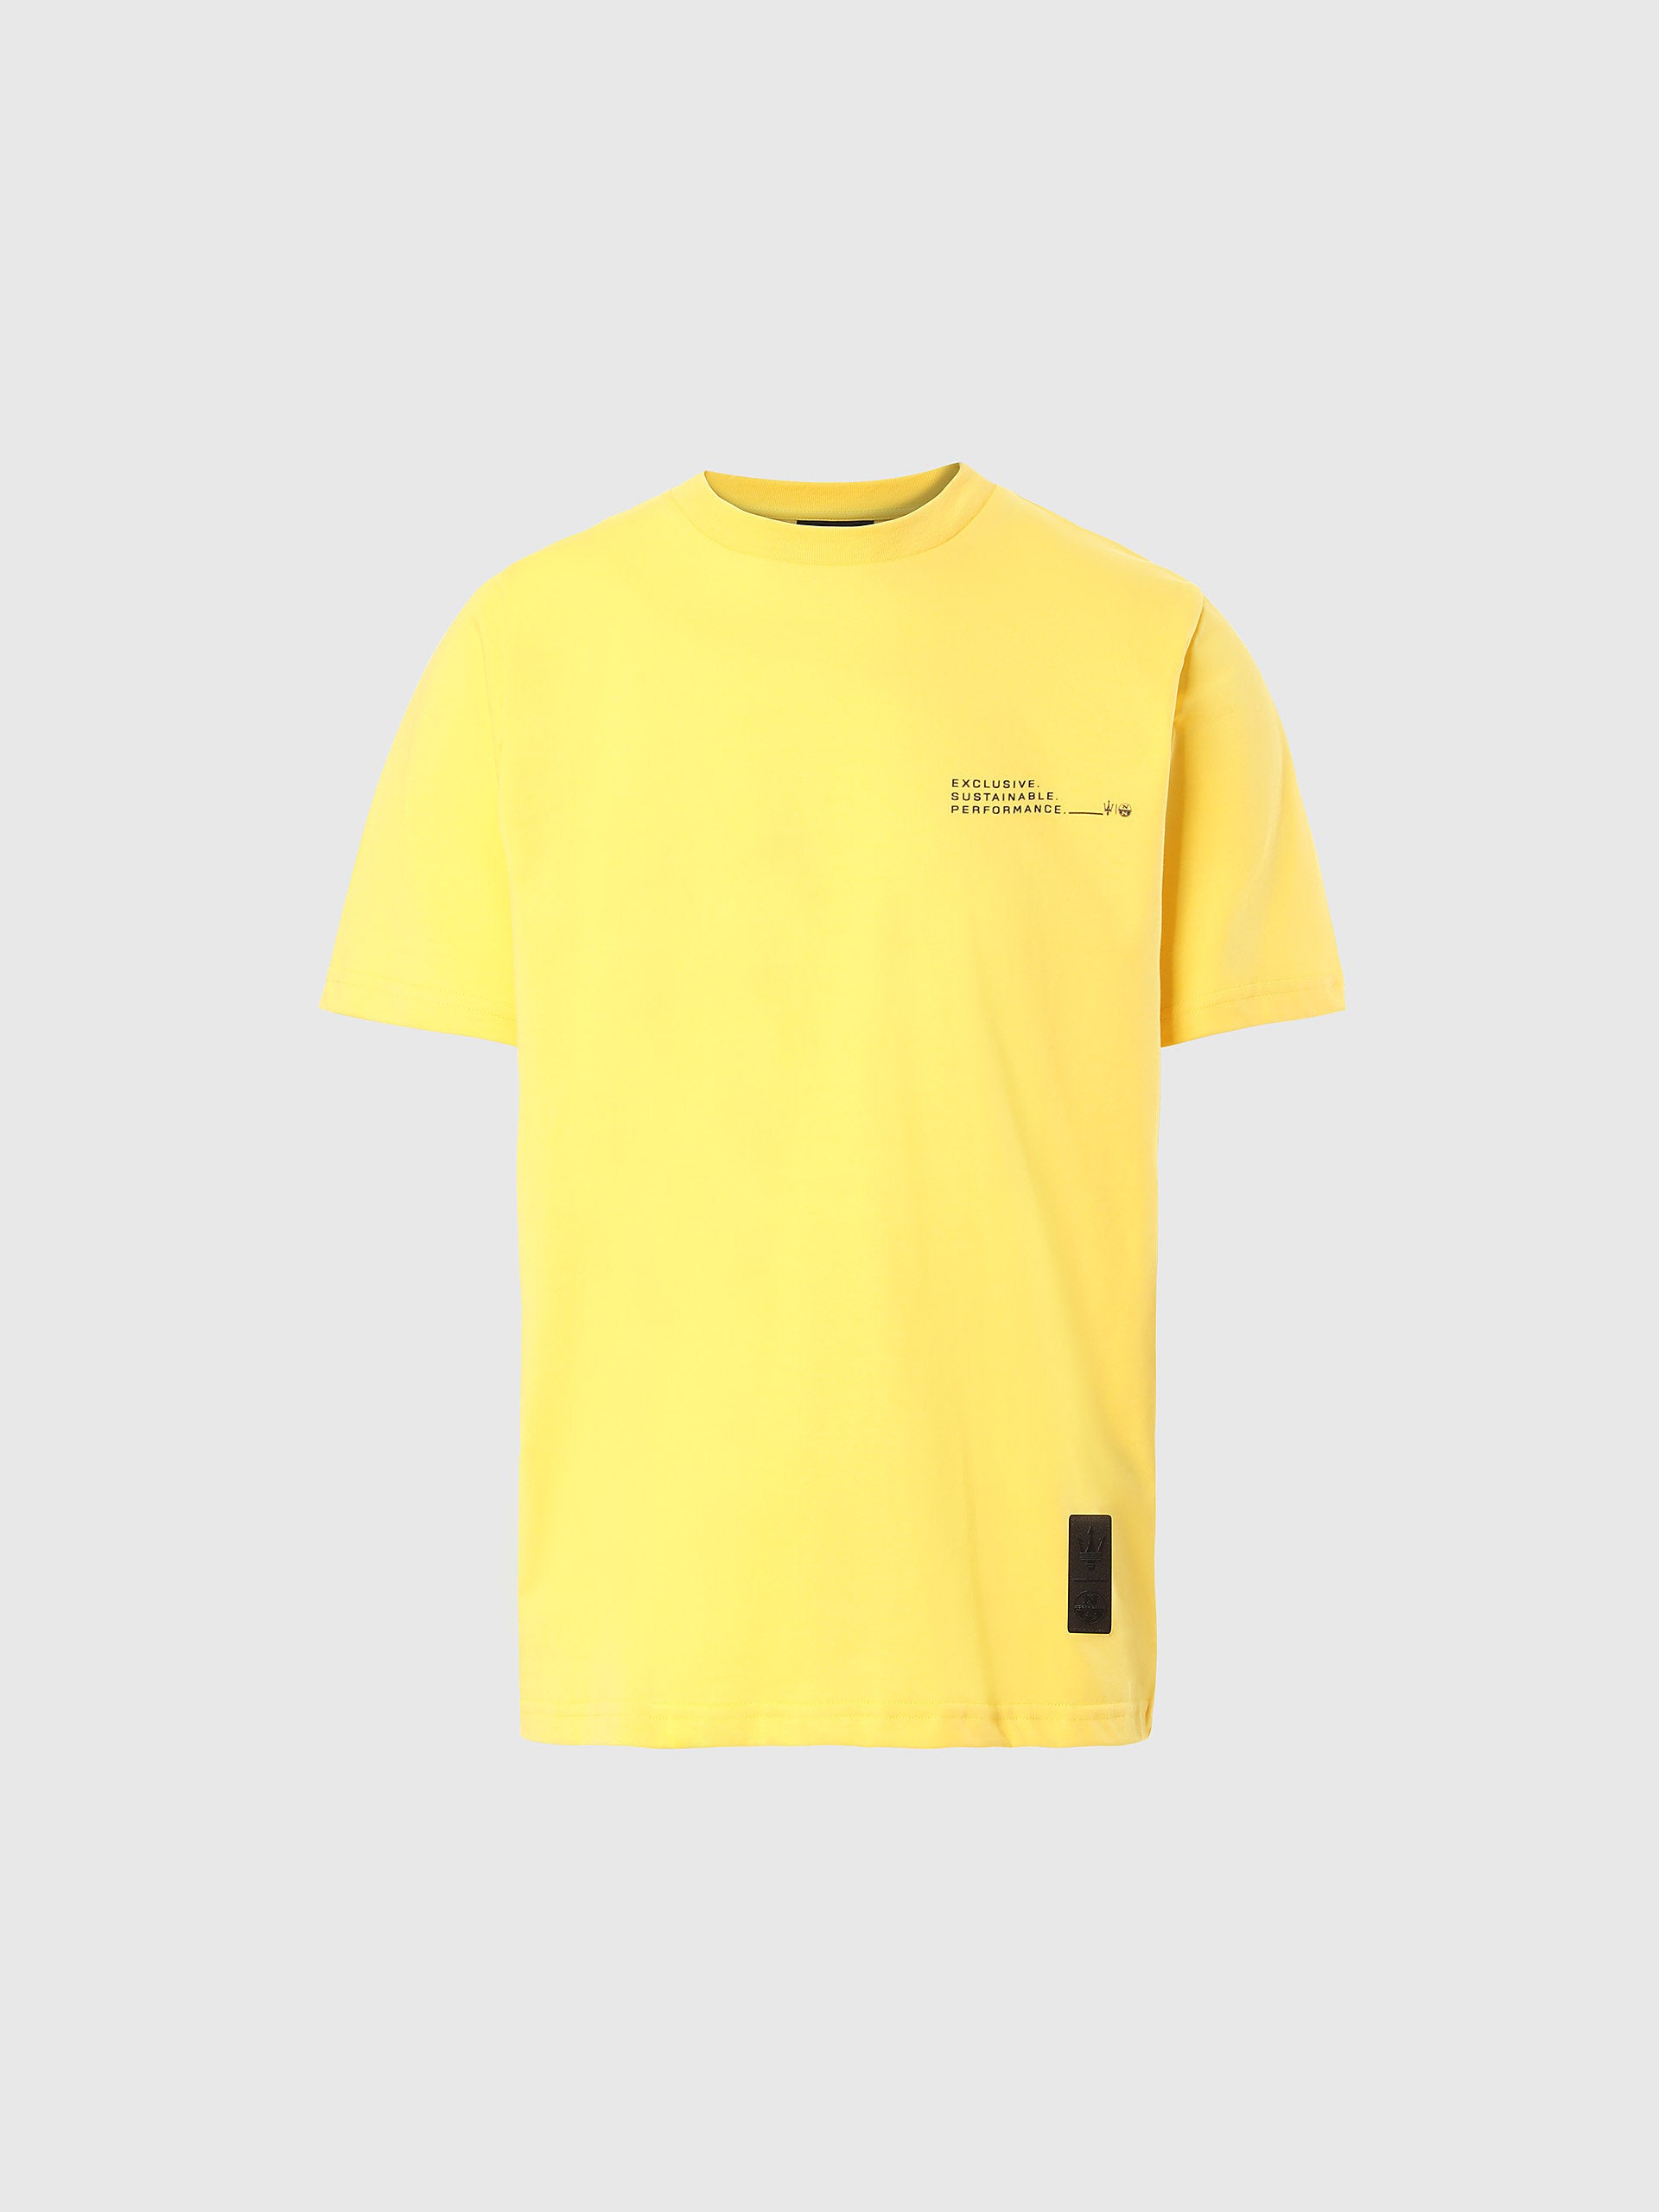 North Sails - Organic jersey T-shirtNorth SailsMaserati yellowM